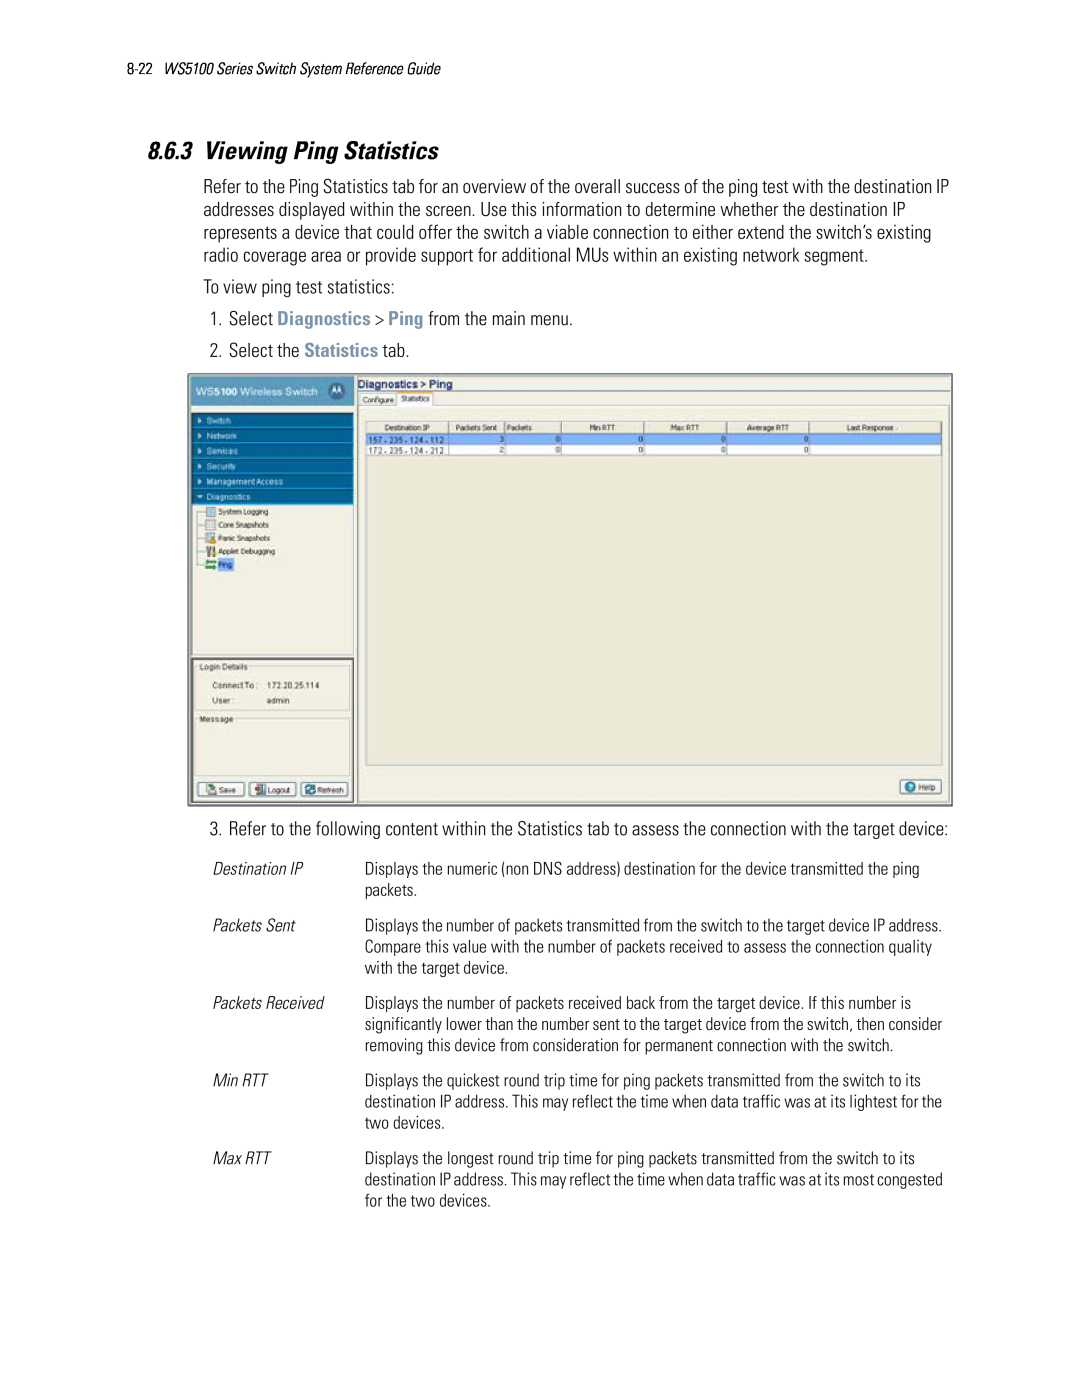 Motorola WS5100 manual Viewing Ping Statistics, To view ping test statistics, Select Diagnostics > Ping from the main menu 